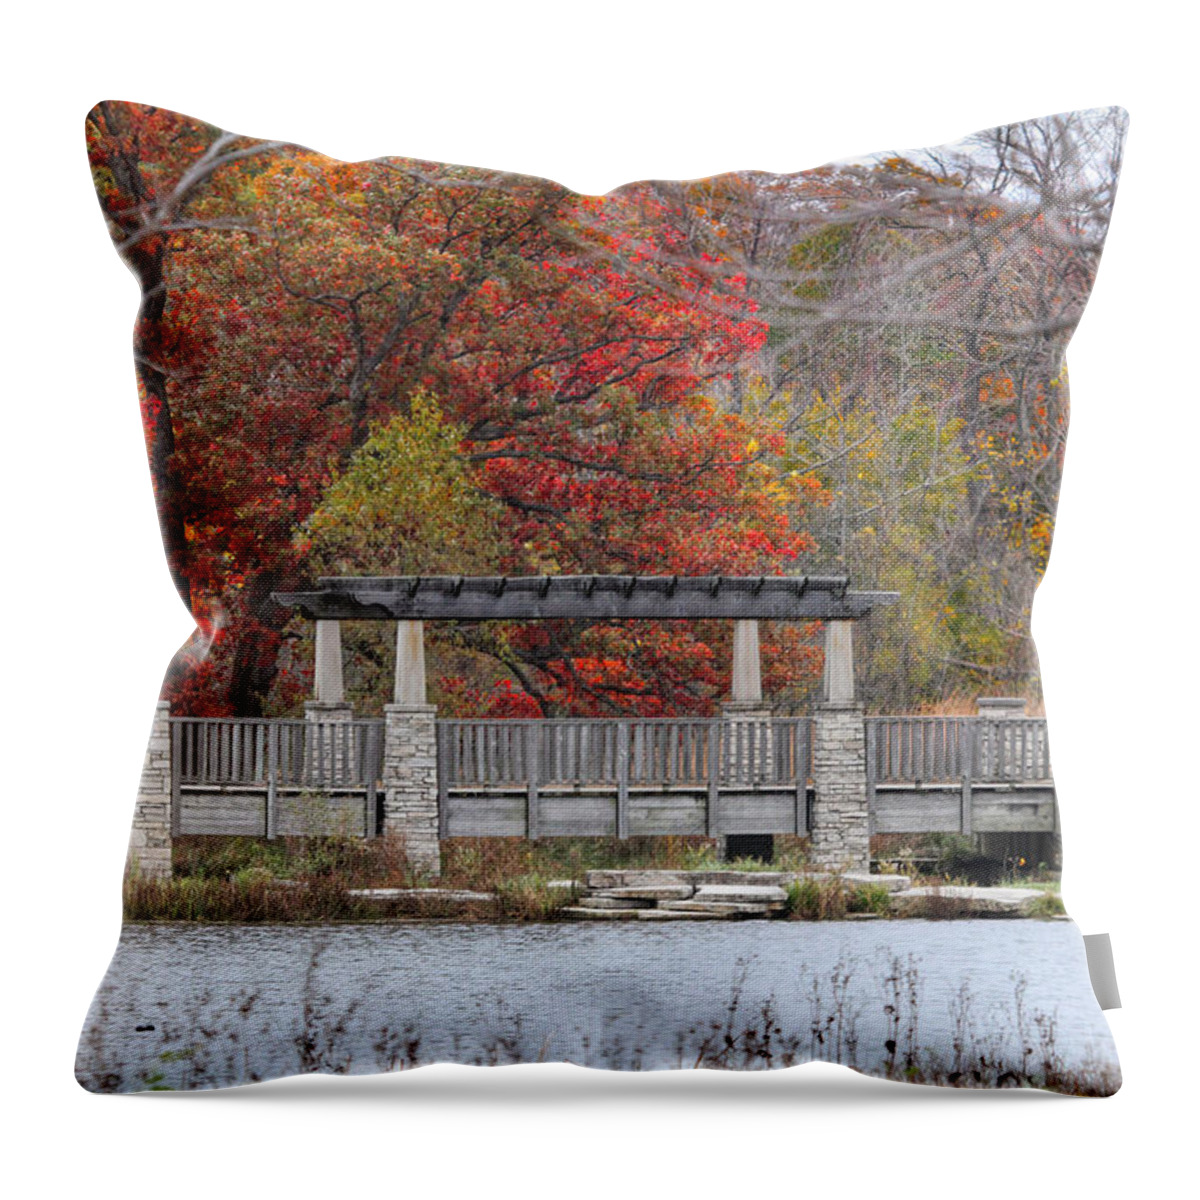 Autumn Throw Pillow featuring the photograph Autumn's Beauty by Jackson Pearson